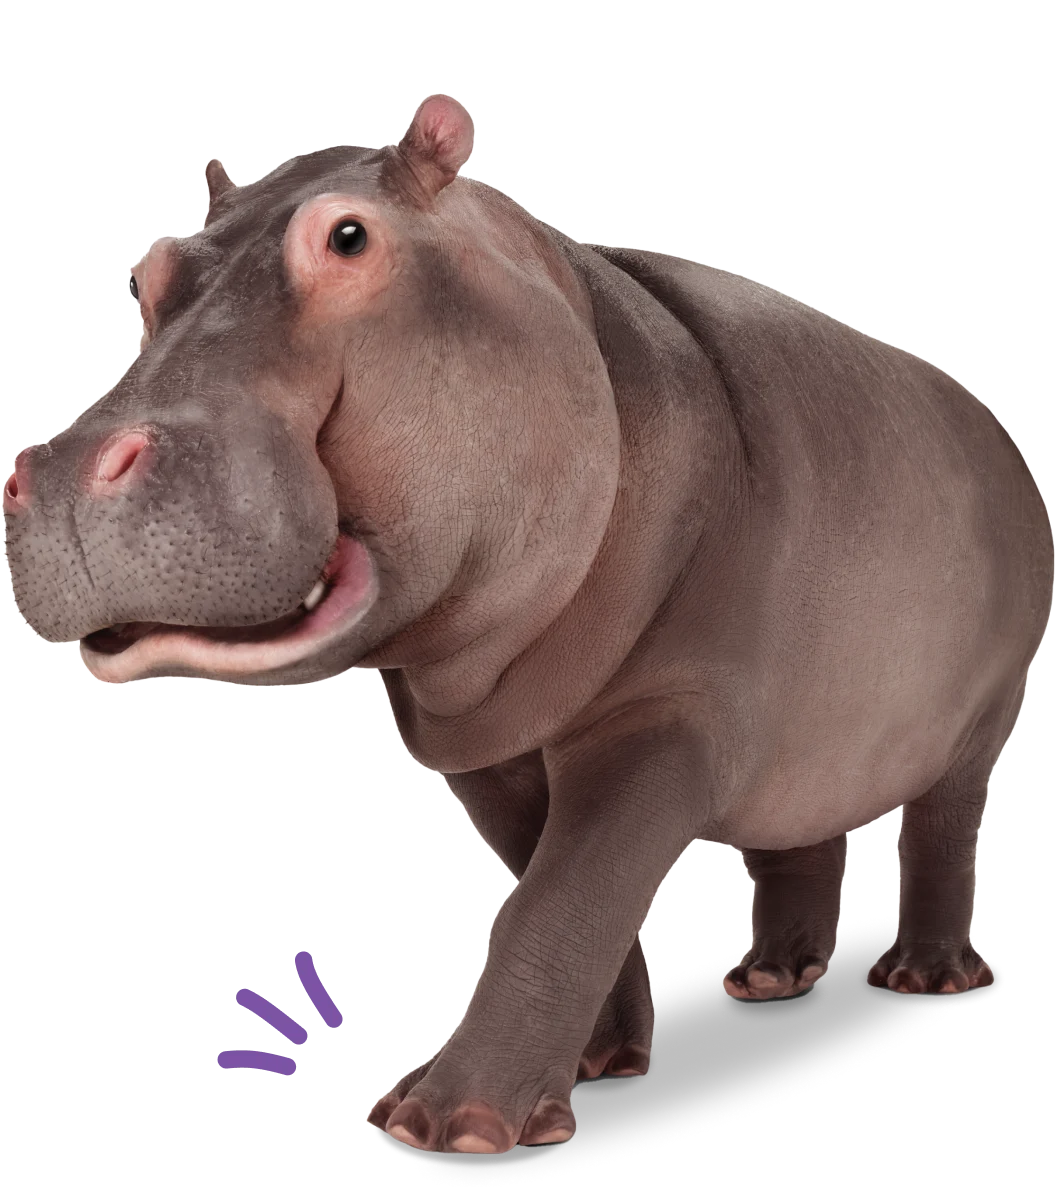 A hippo walking